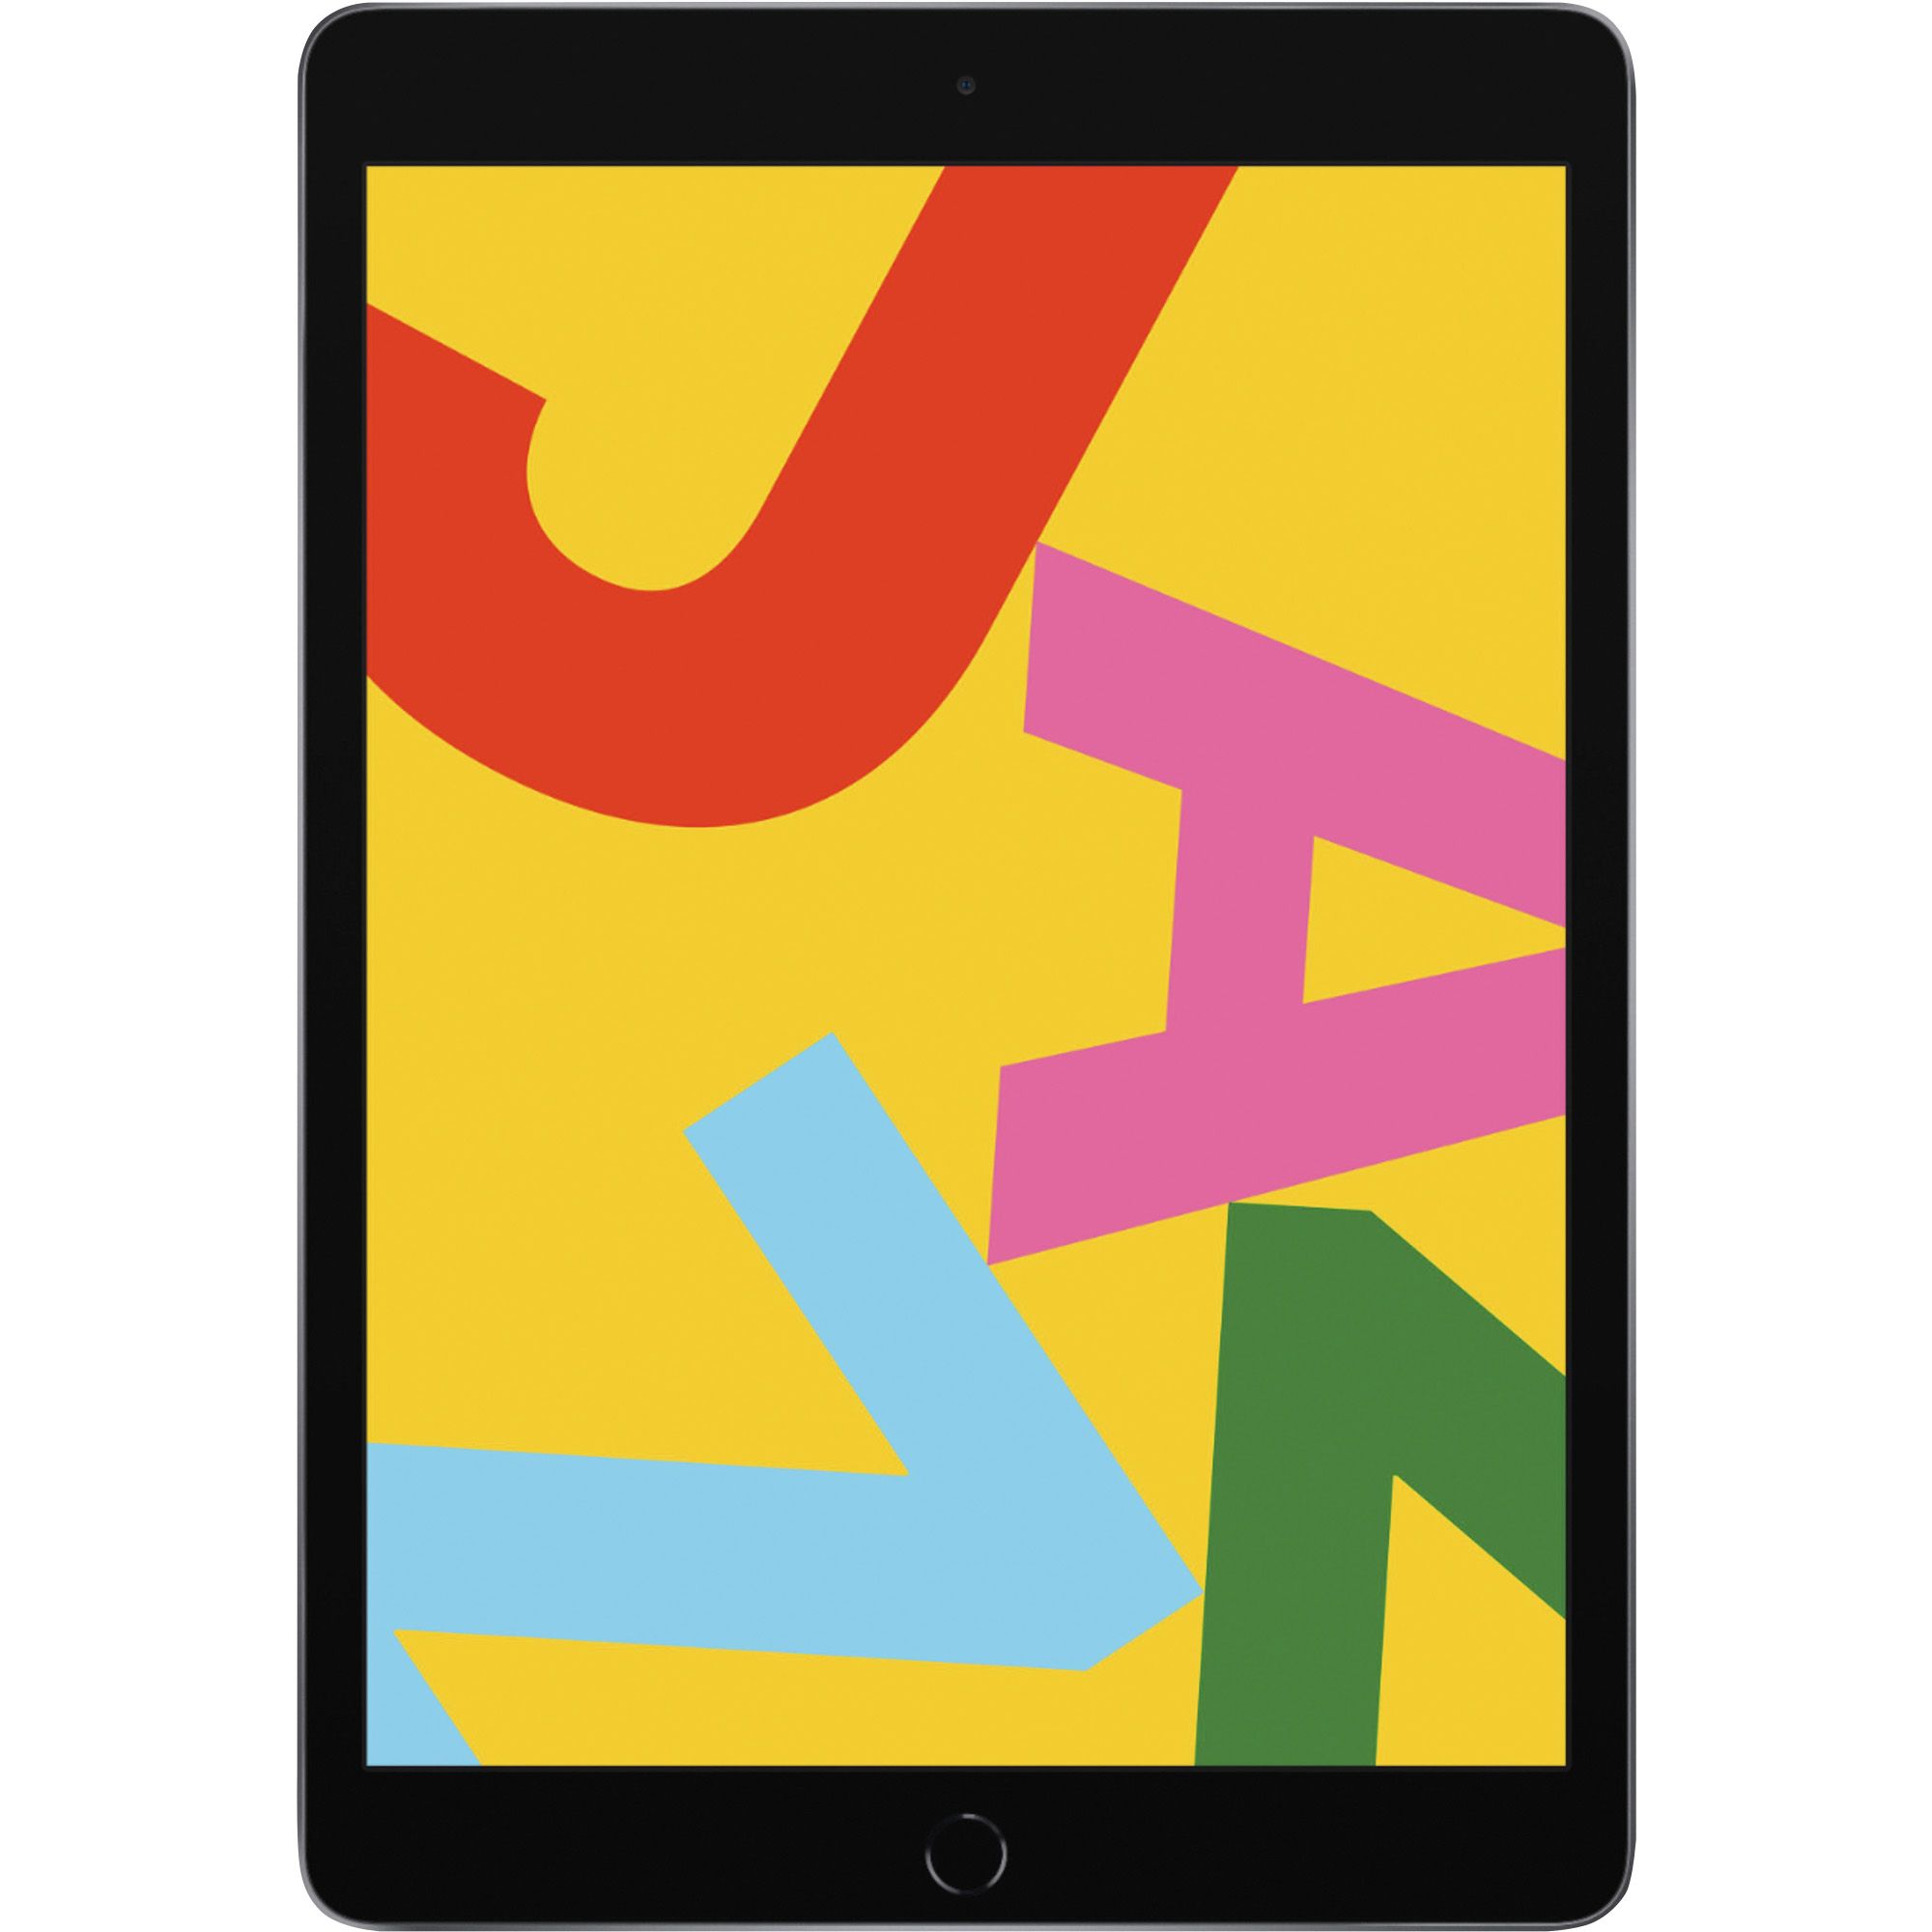 Fingerhut Apple Ipad 7 32gb Wi Fi Tablet With 10 2 Retina Display Space Gray